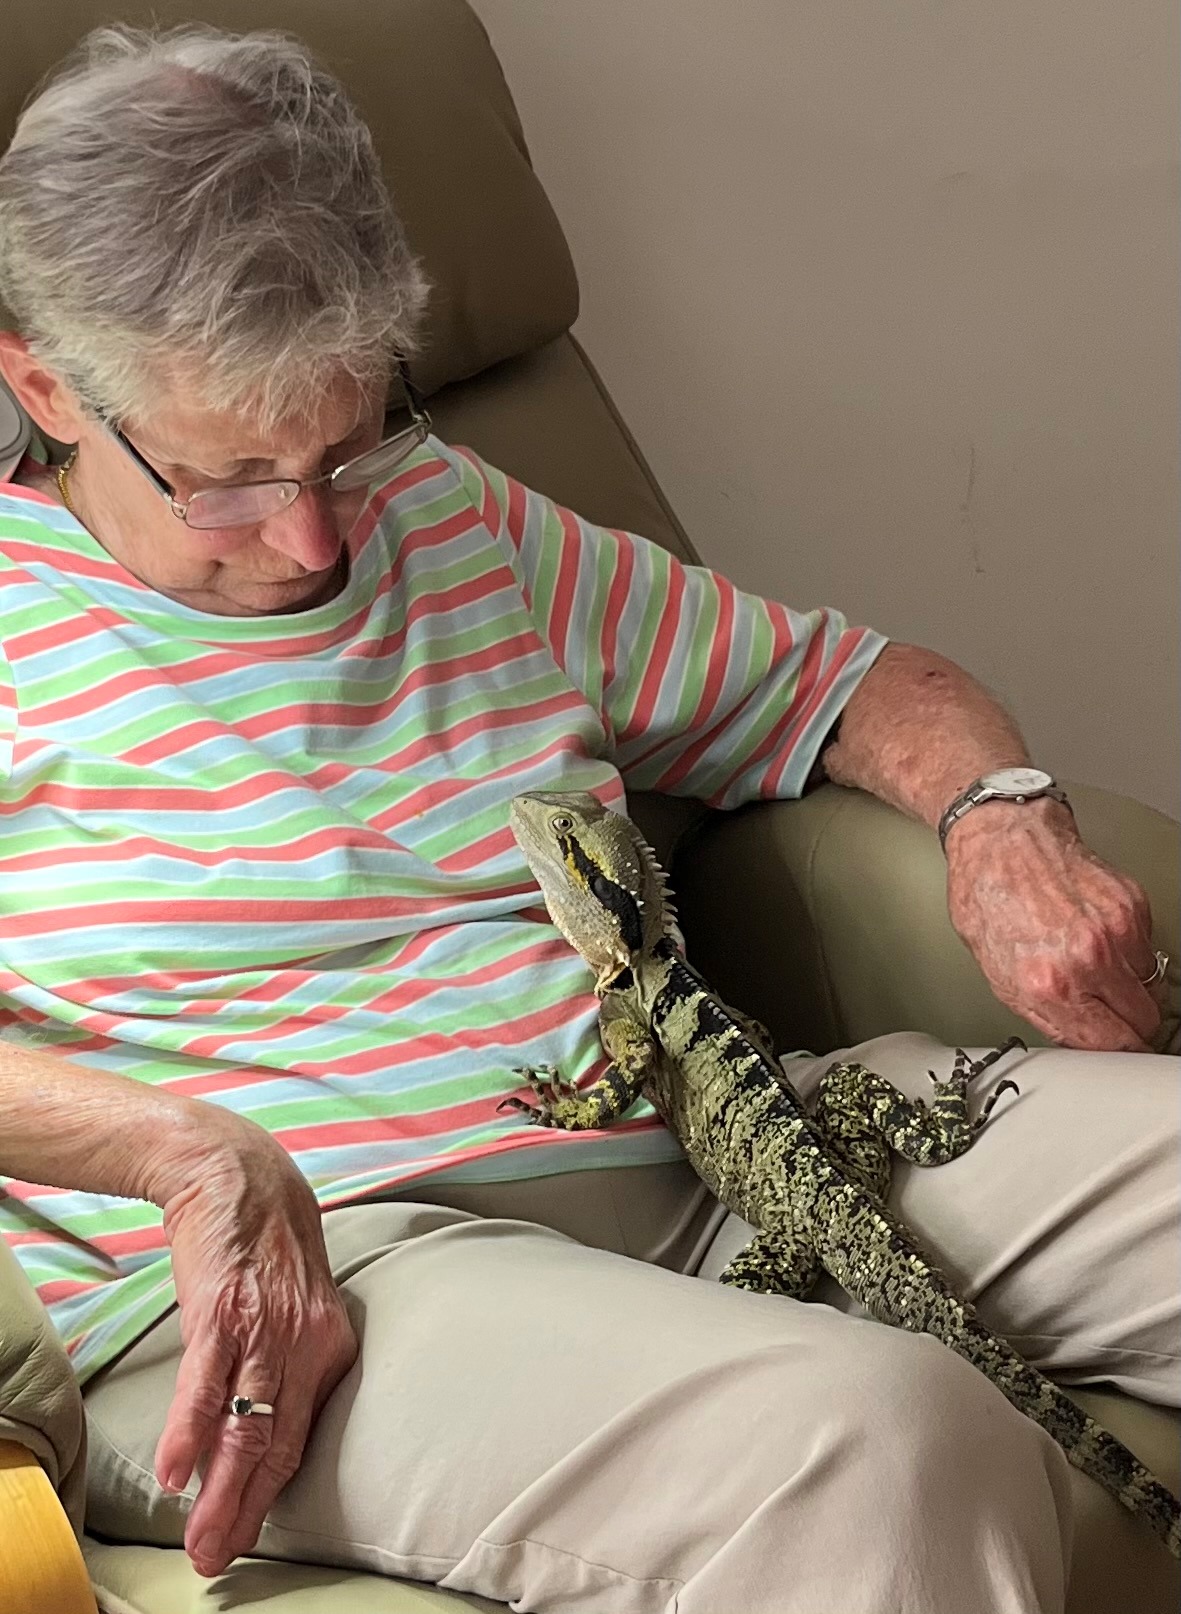 Woman sleeping with lizard on lap